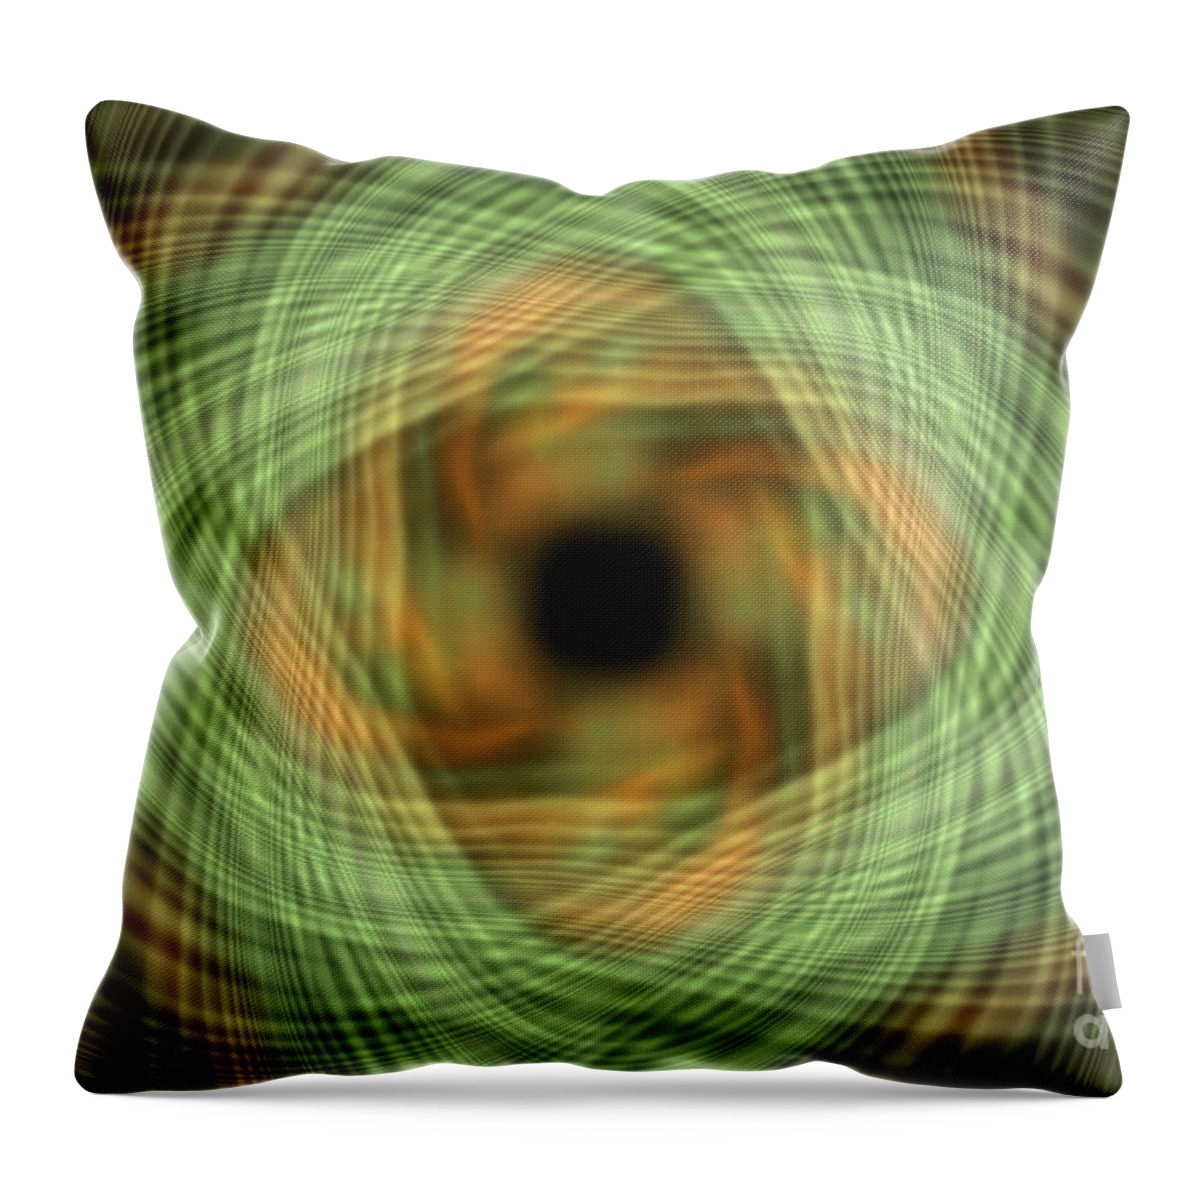 Digital Throw Pillow featuring the digital art Swirly Plaid by Deborah Benoit